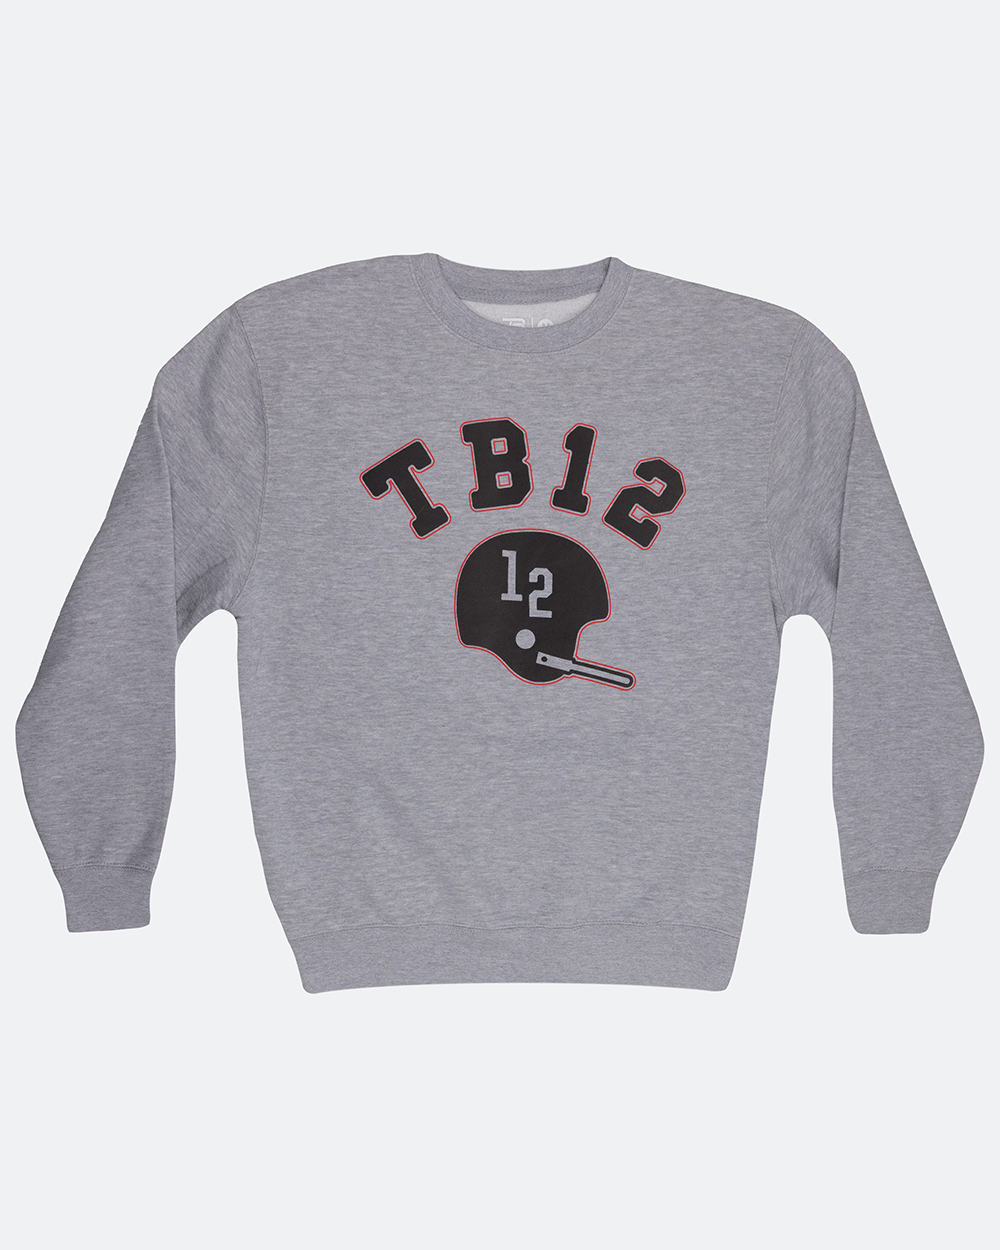 Gray crewneck sweatshirt with TB12 logo